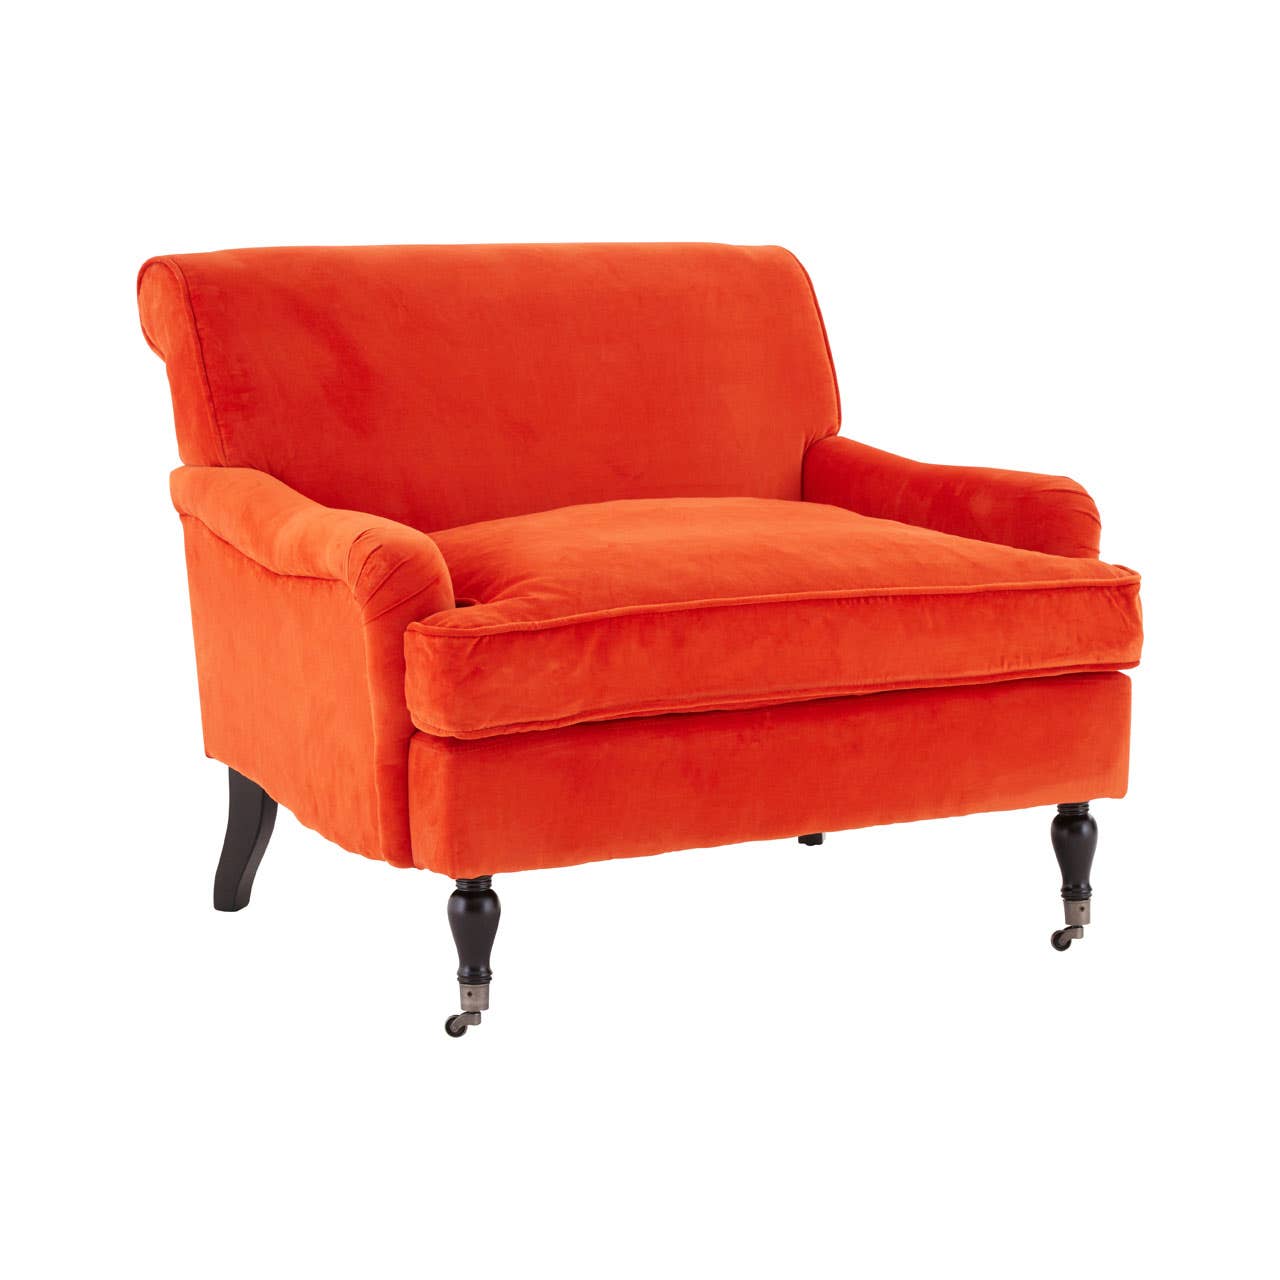 Large Plush Orange Armchair